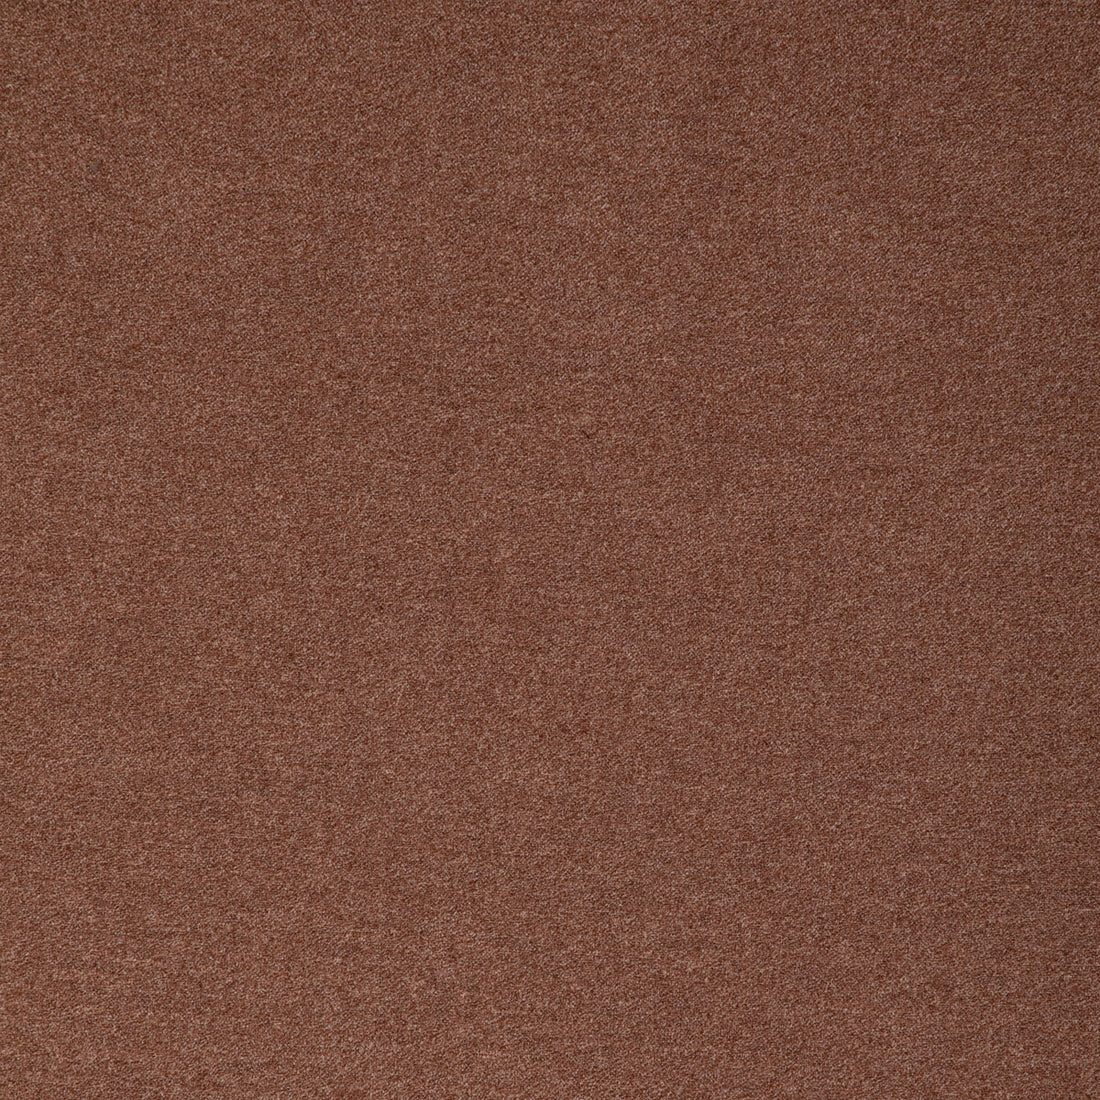 Kravet Smart fabric in 37000-12 color - pattern 37000.12.0 - by Kravet Smart in the Performance Kravetarmor collection